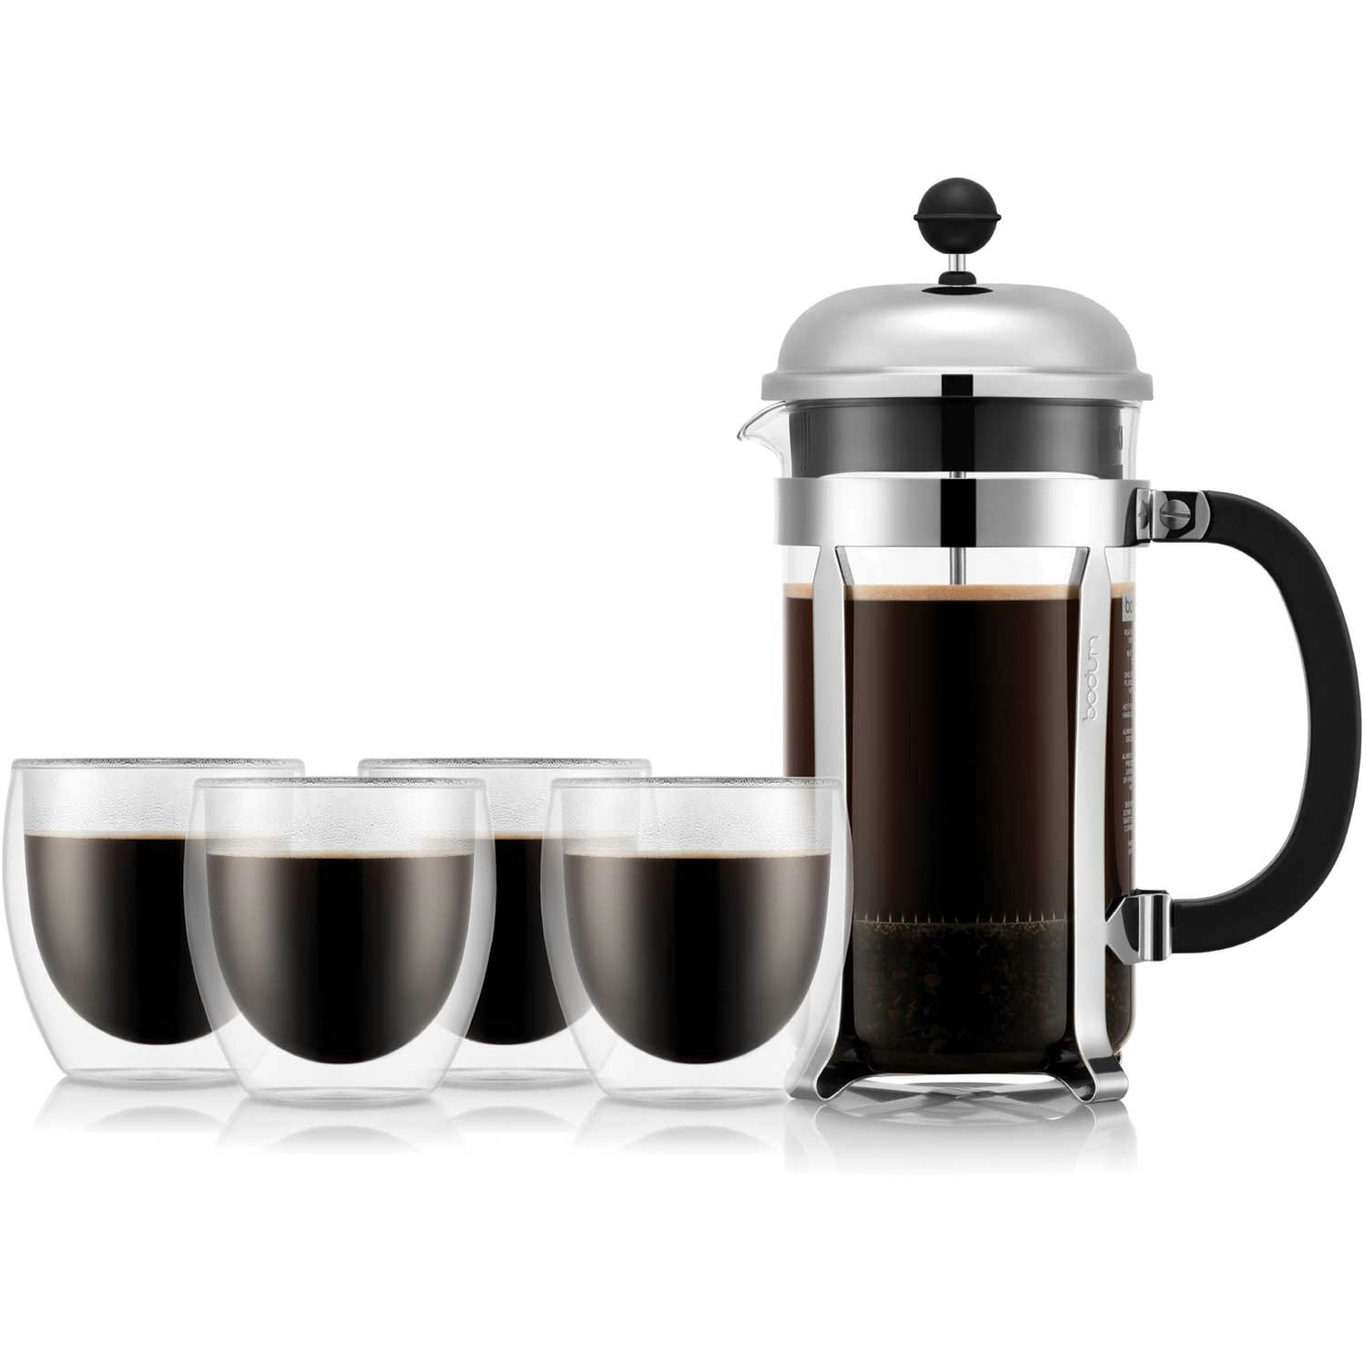 https://royaldesign.co.uk/image/6/bodum-chambord-coffee-press-8-cups-24?w=800&quality=80